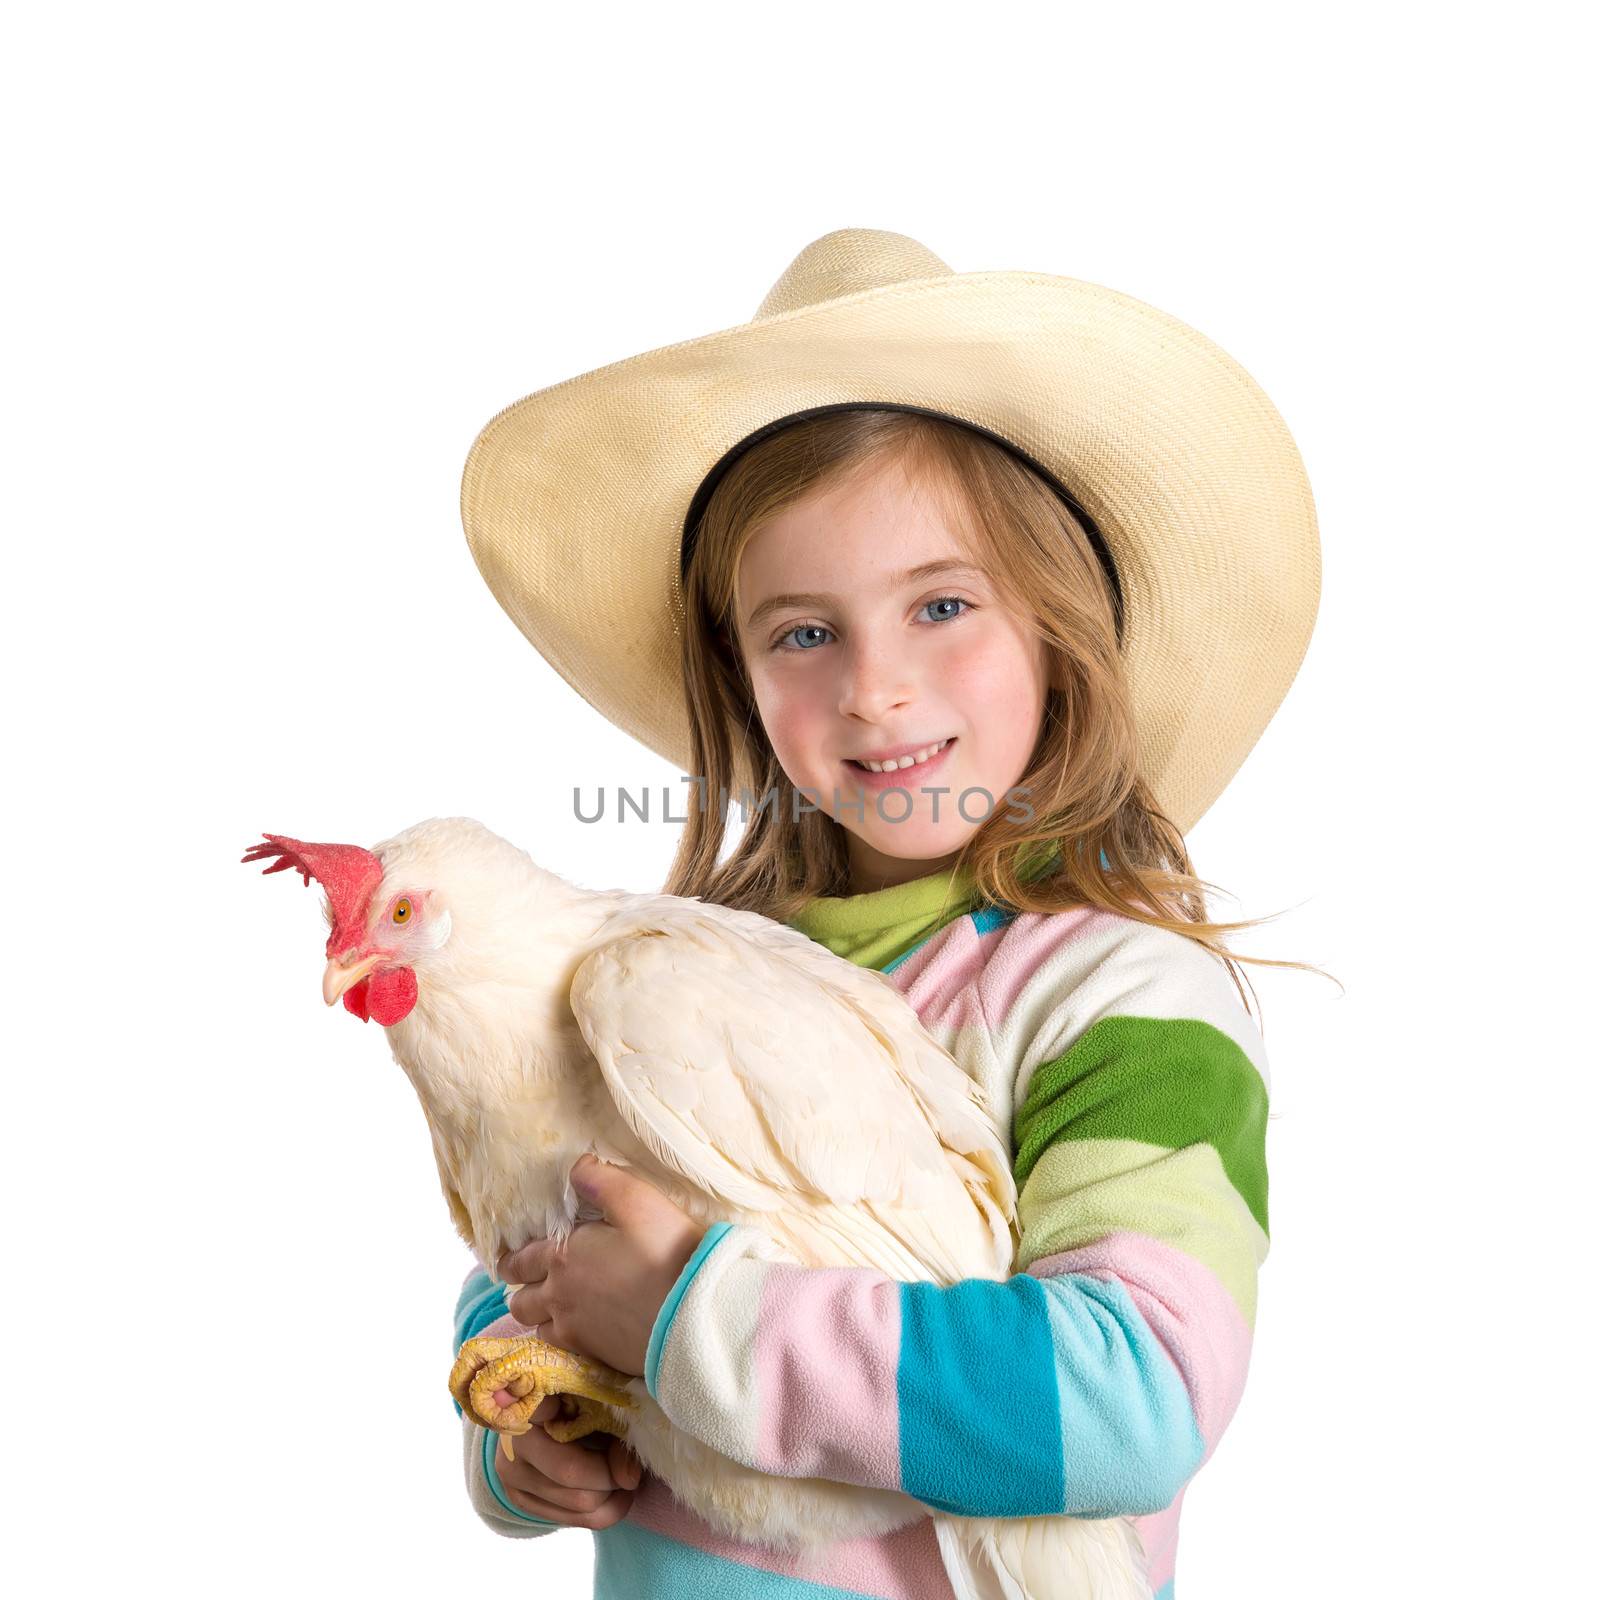 Blond kid girl farmer holding white hen on arms by lunamarina